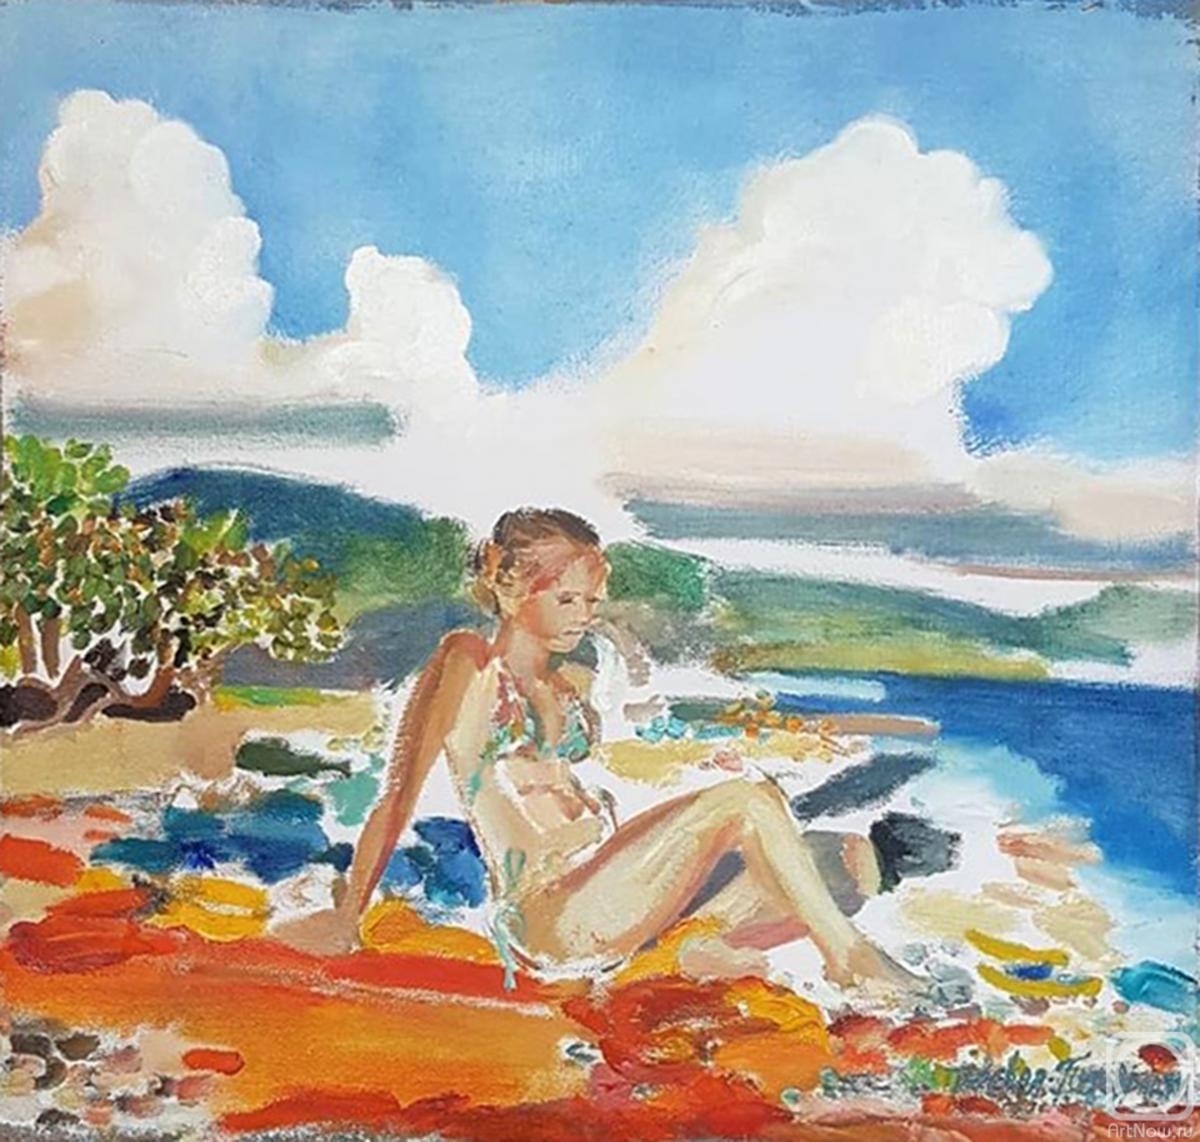 Petrovskaya-Petovraji Olga. On a wild beach